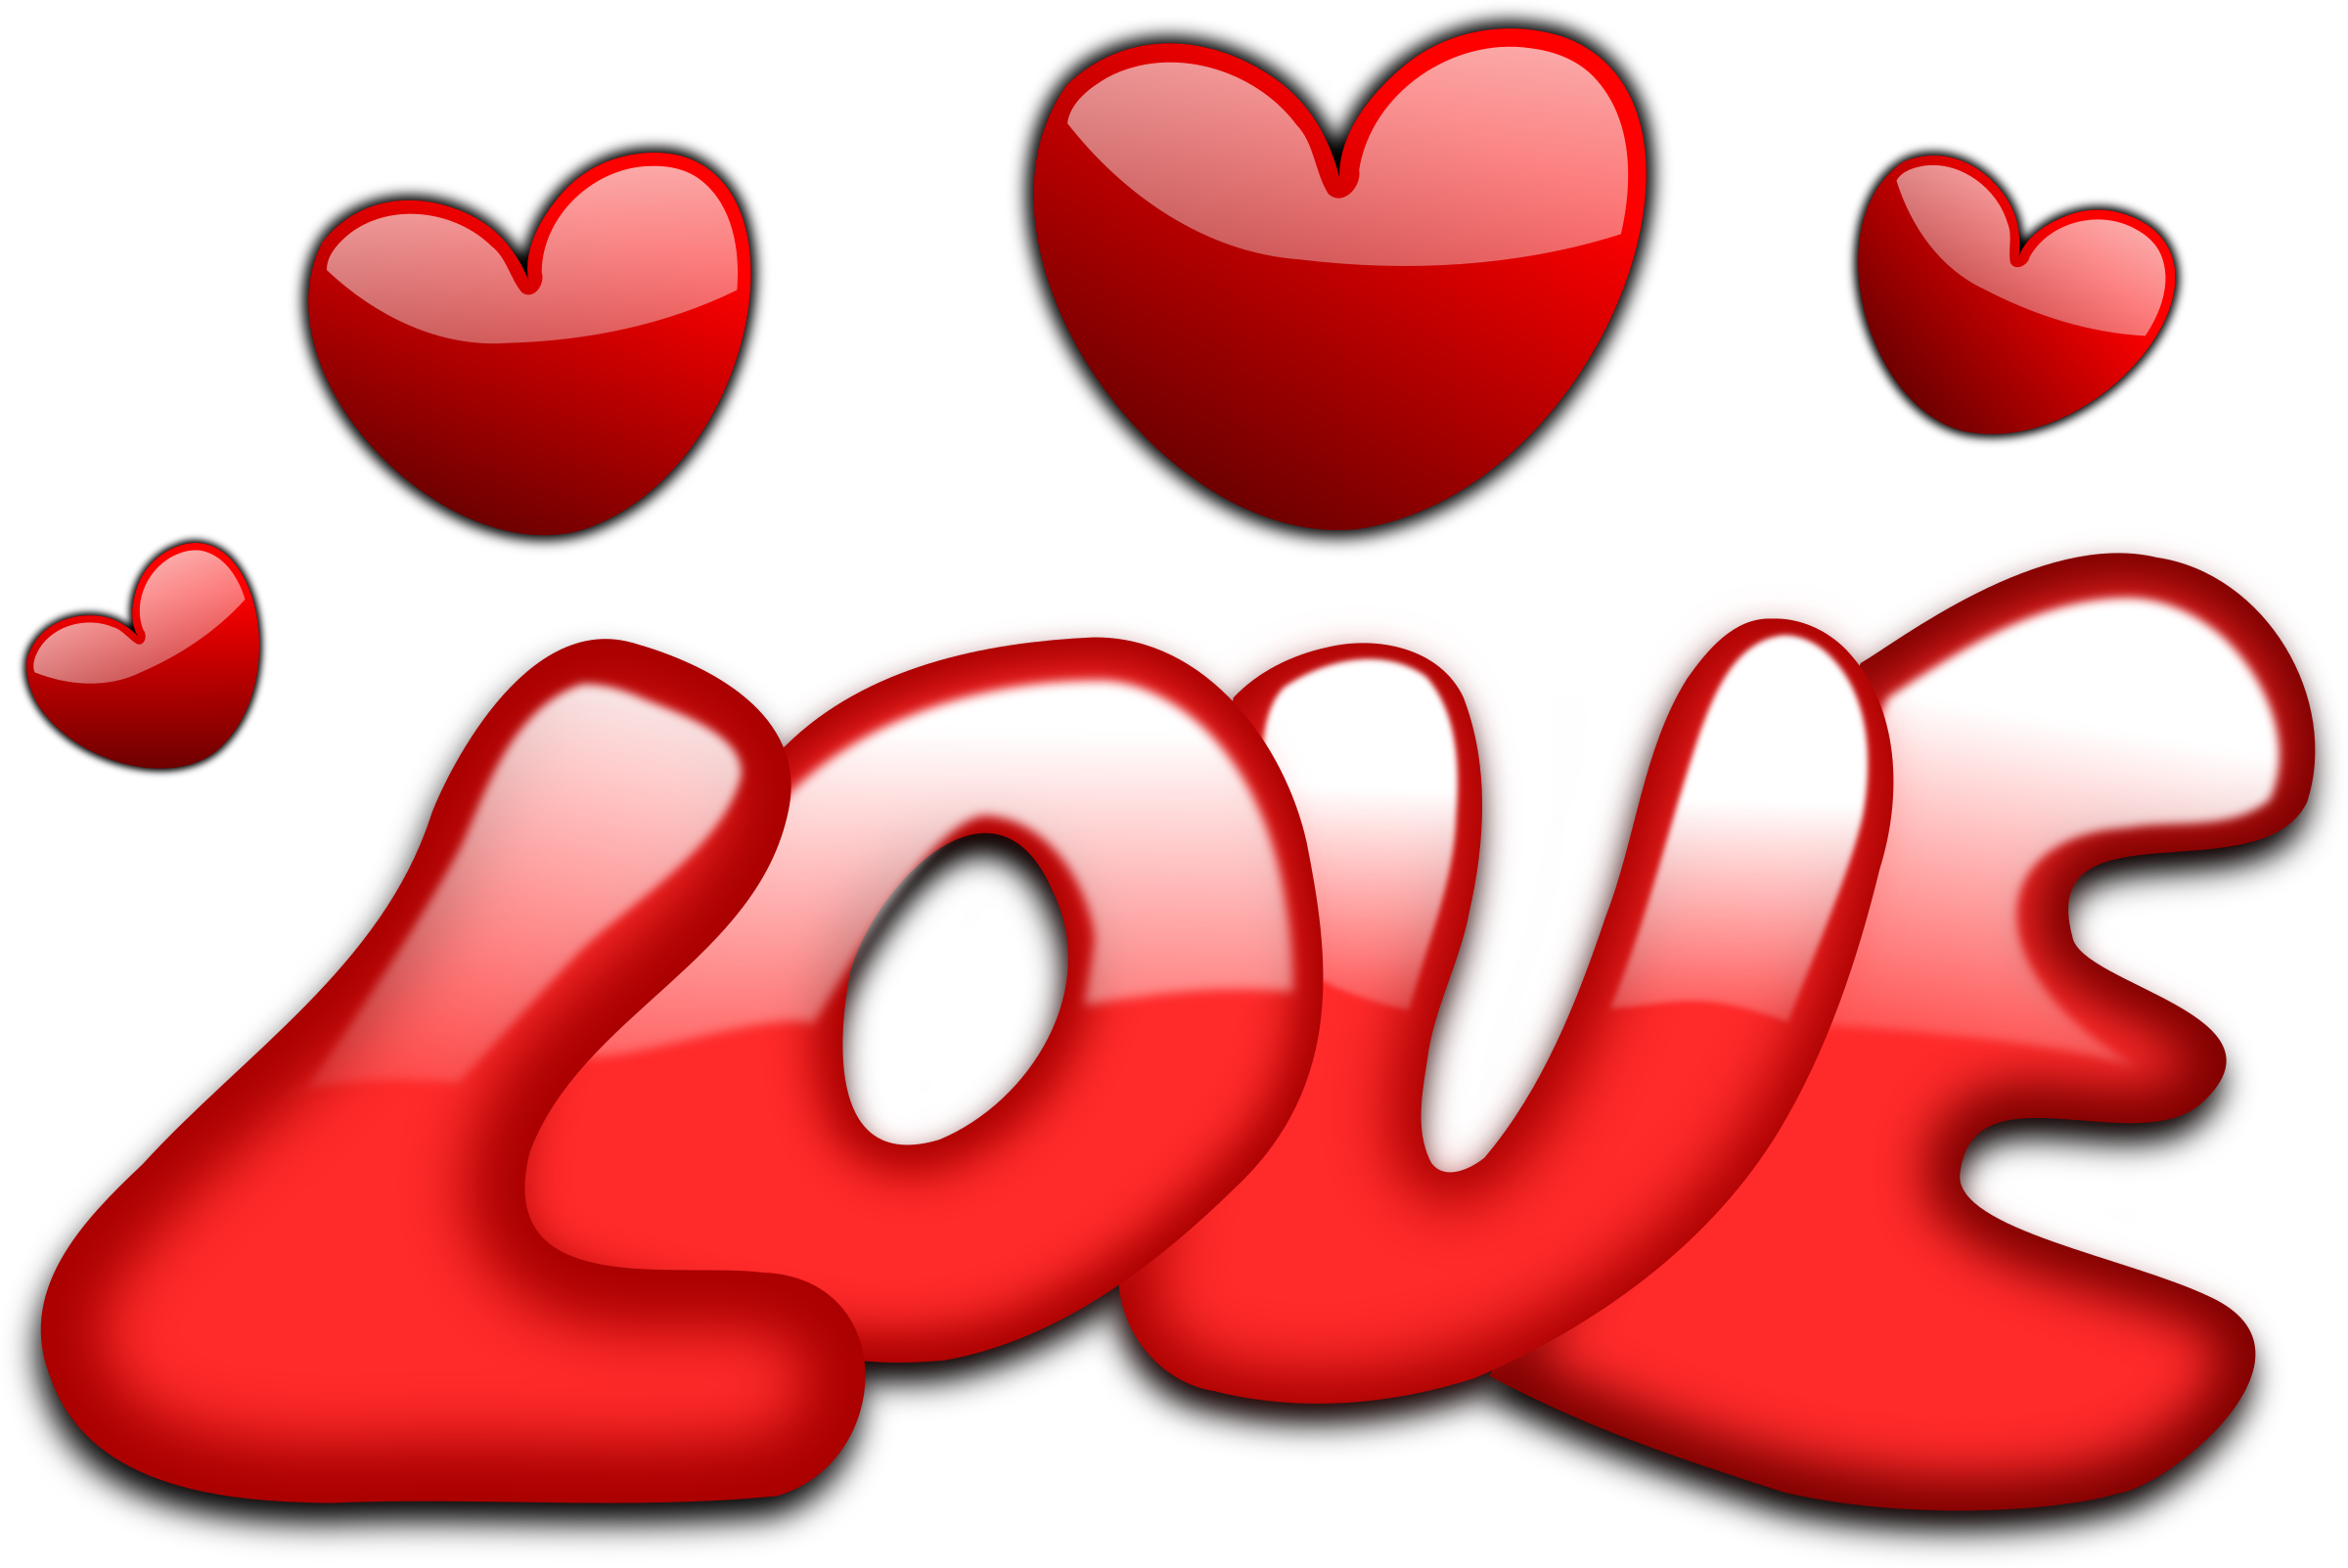 LOVE love字体 爱心设计图__其他_广告设计_设计图库_昵图网nipic.com